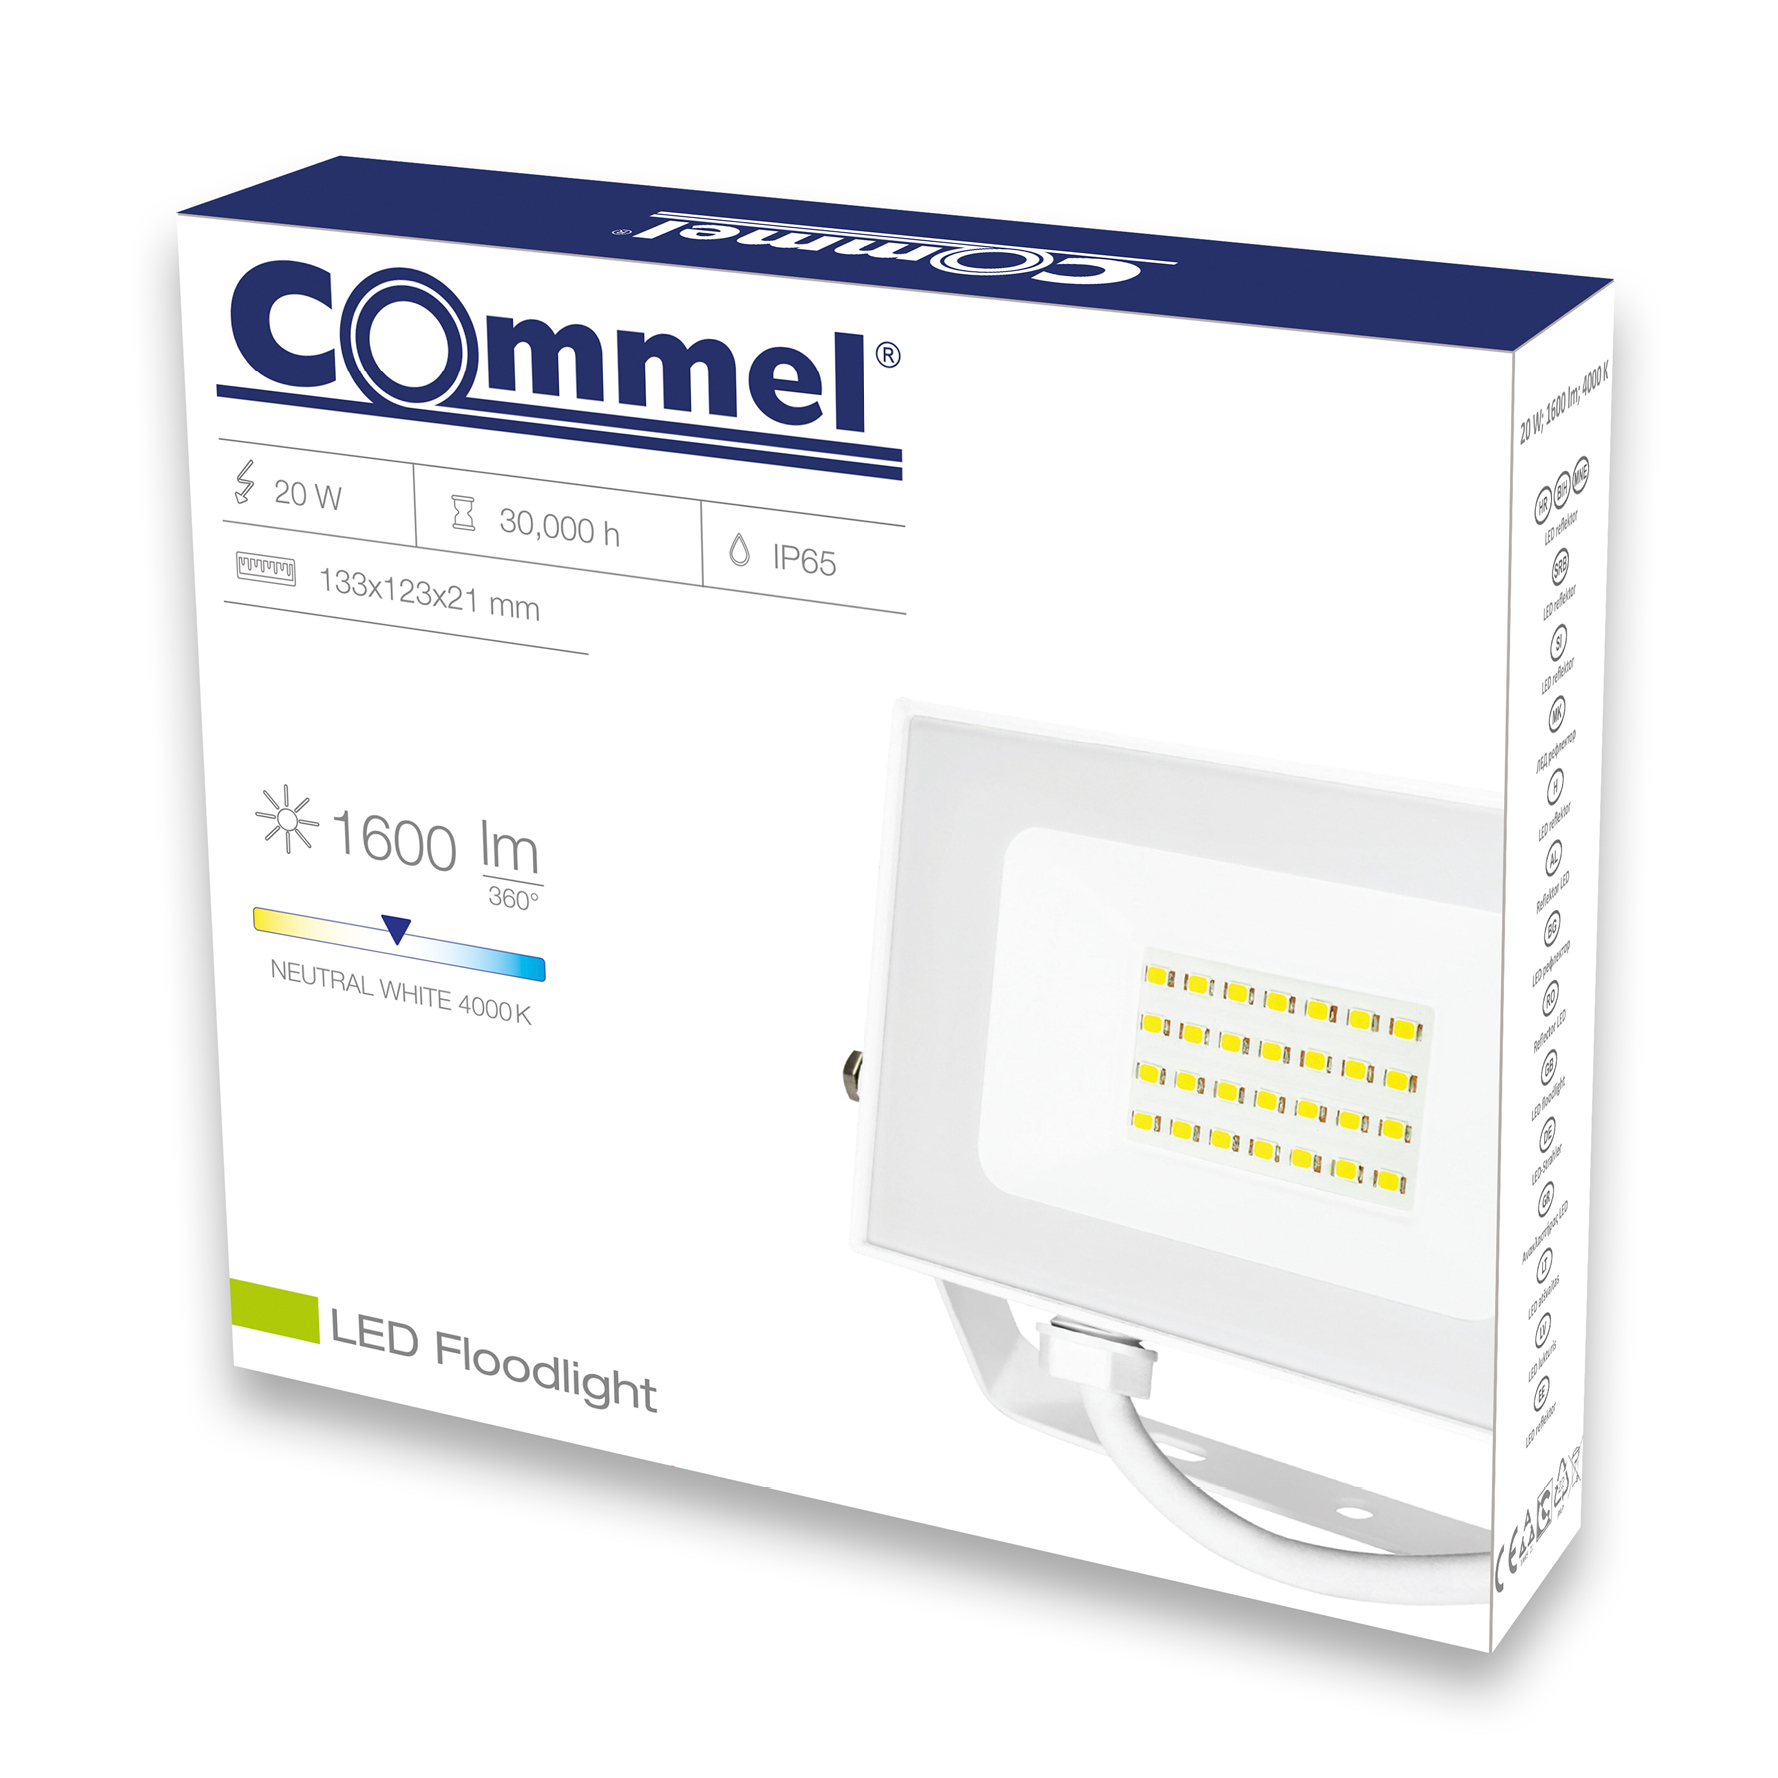 Slika COMMEL LED reflektor 20W, s detektorom pokreta, 307-129, 4000K, 1600Im, IP44, bijeli